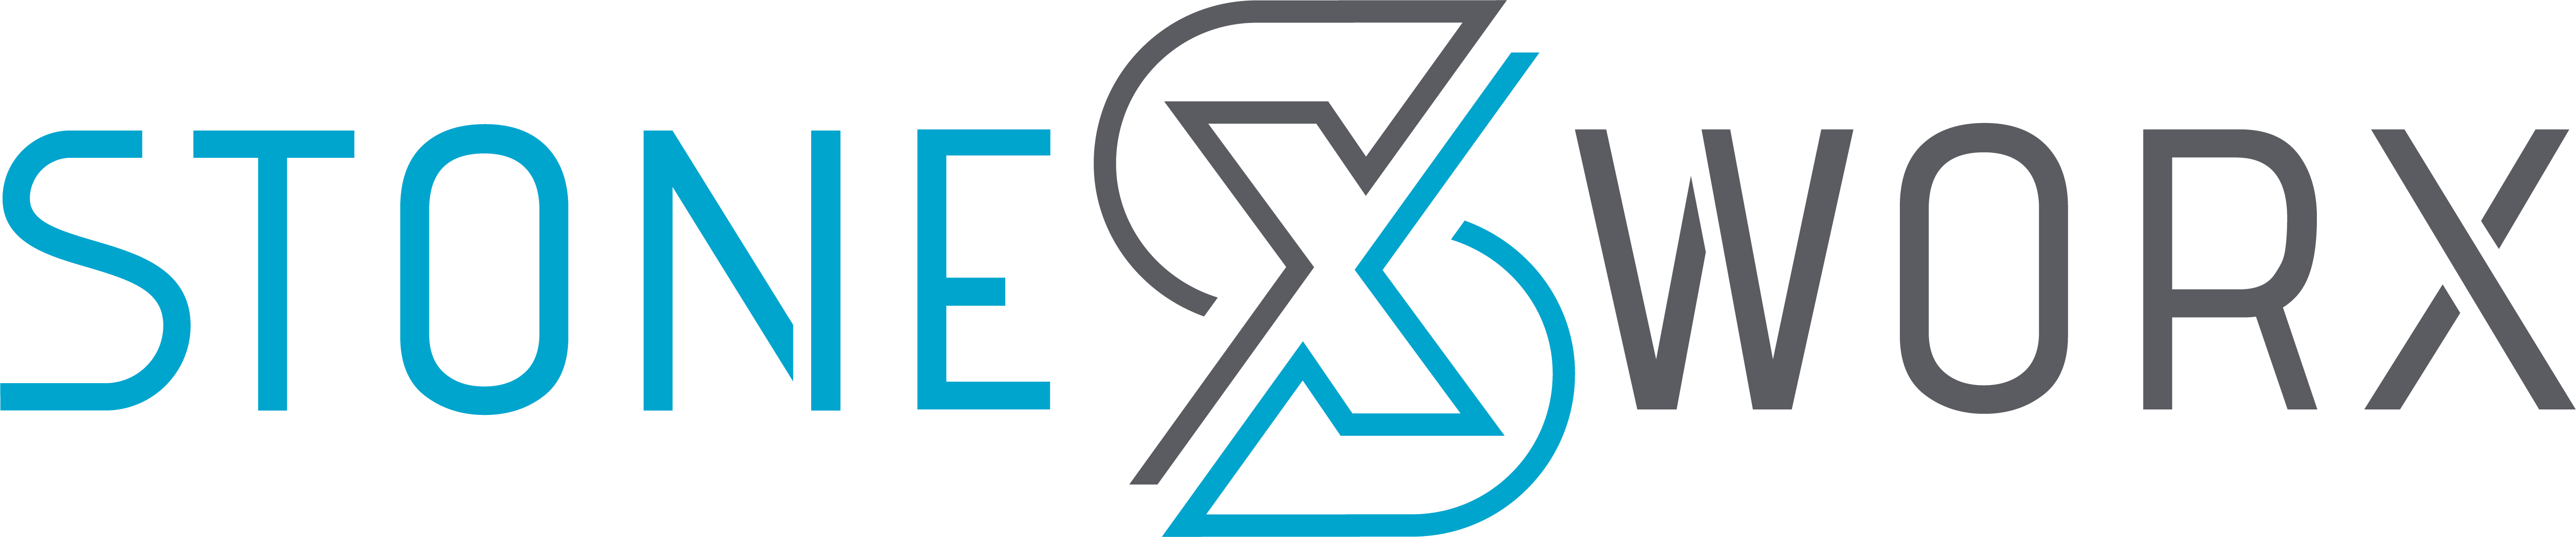 Stoneworx logo